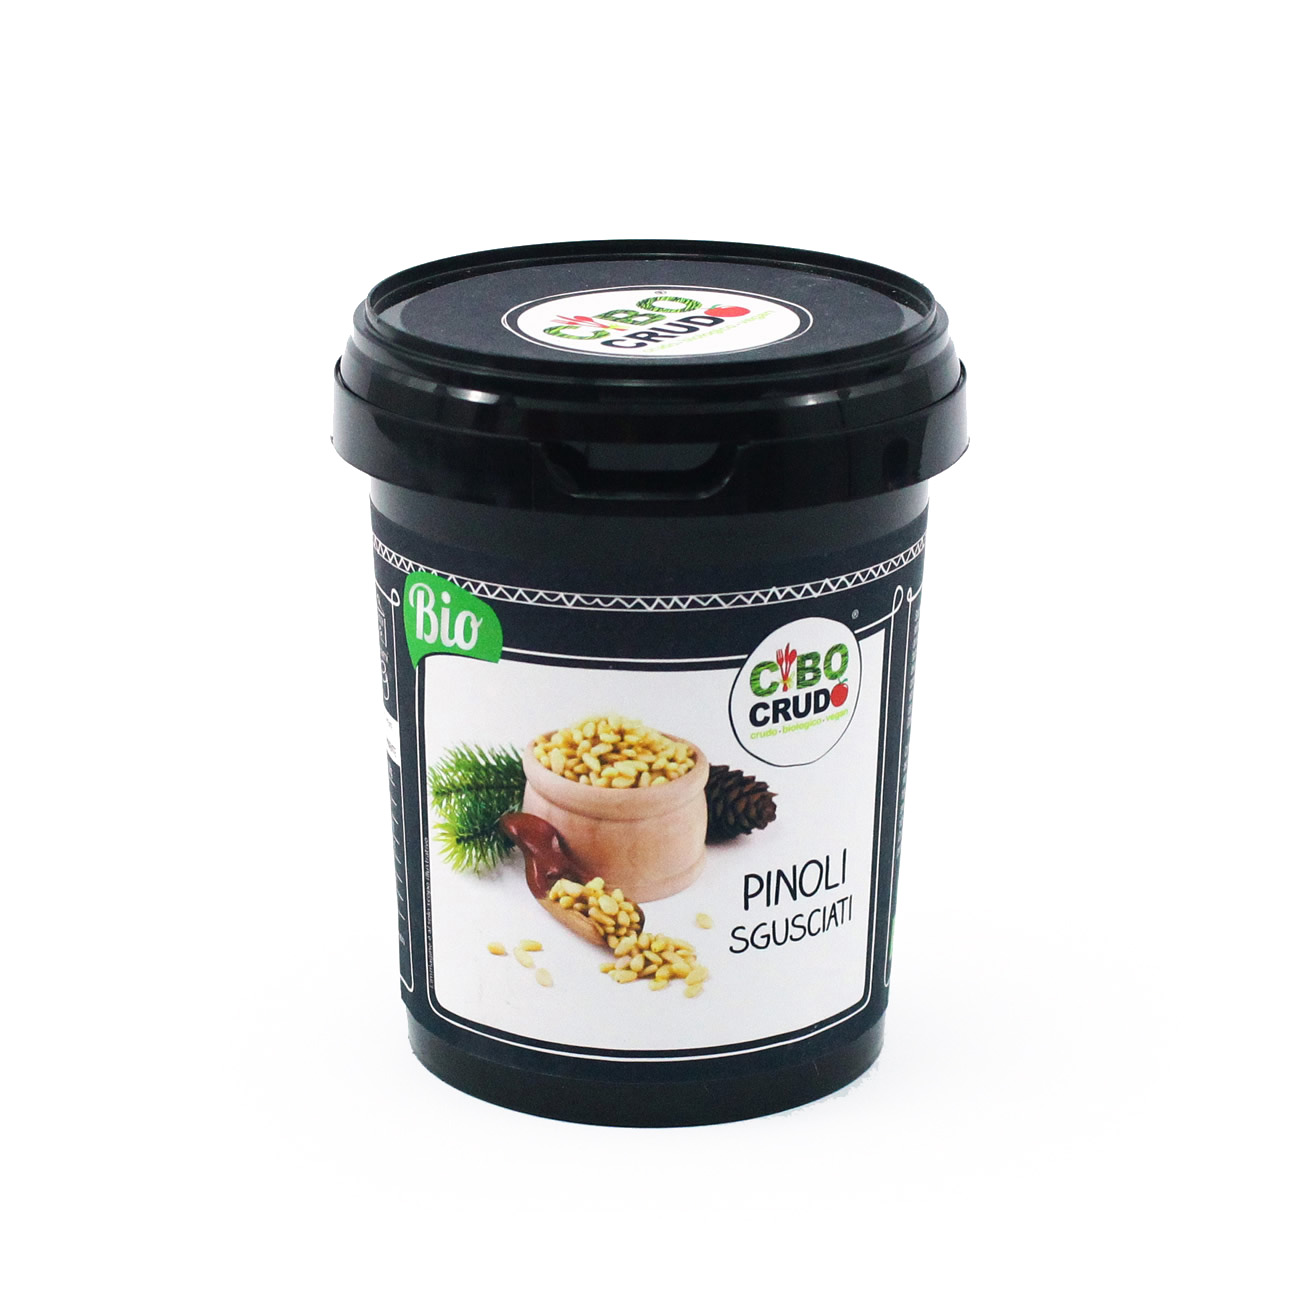 Pinoli Sgusciati Bio - Raw Organic - 250g